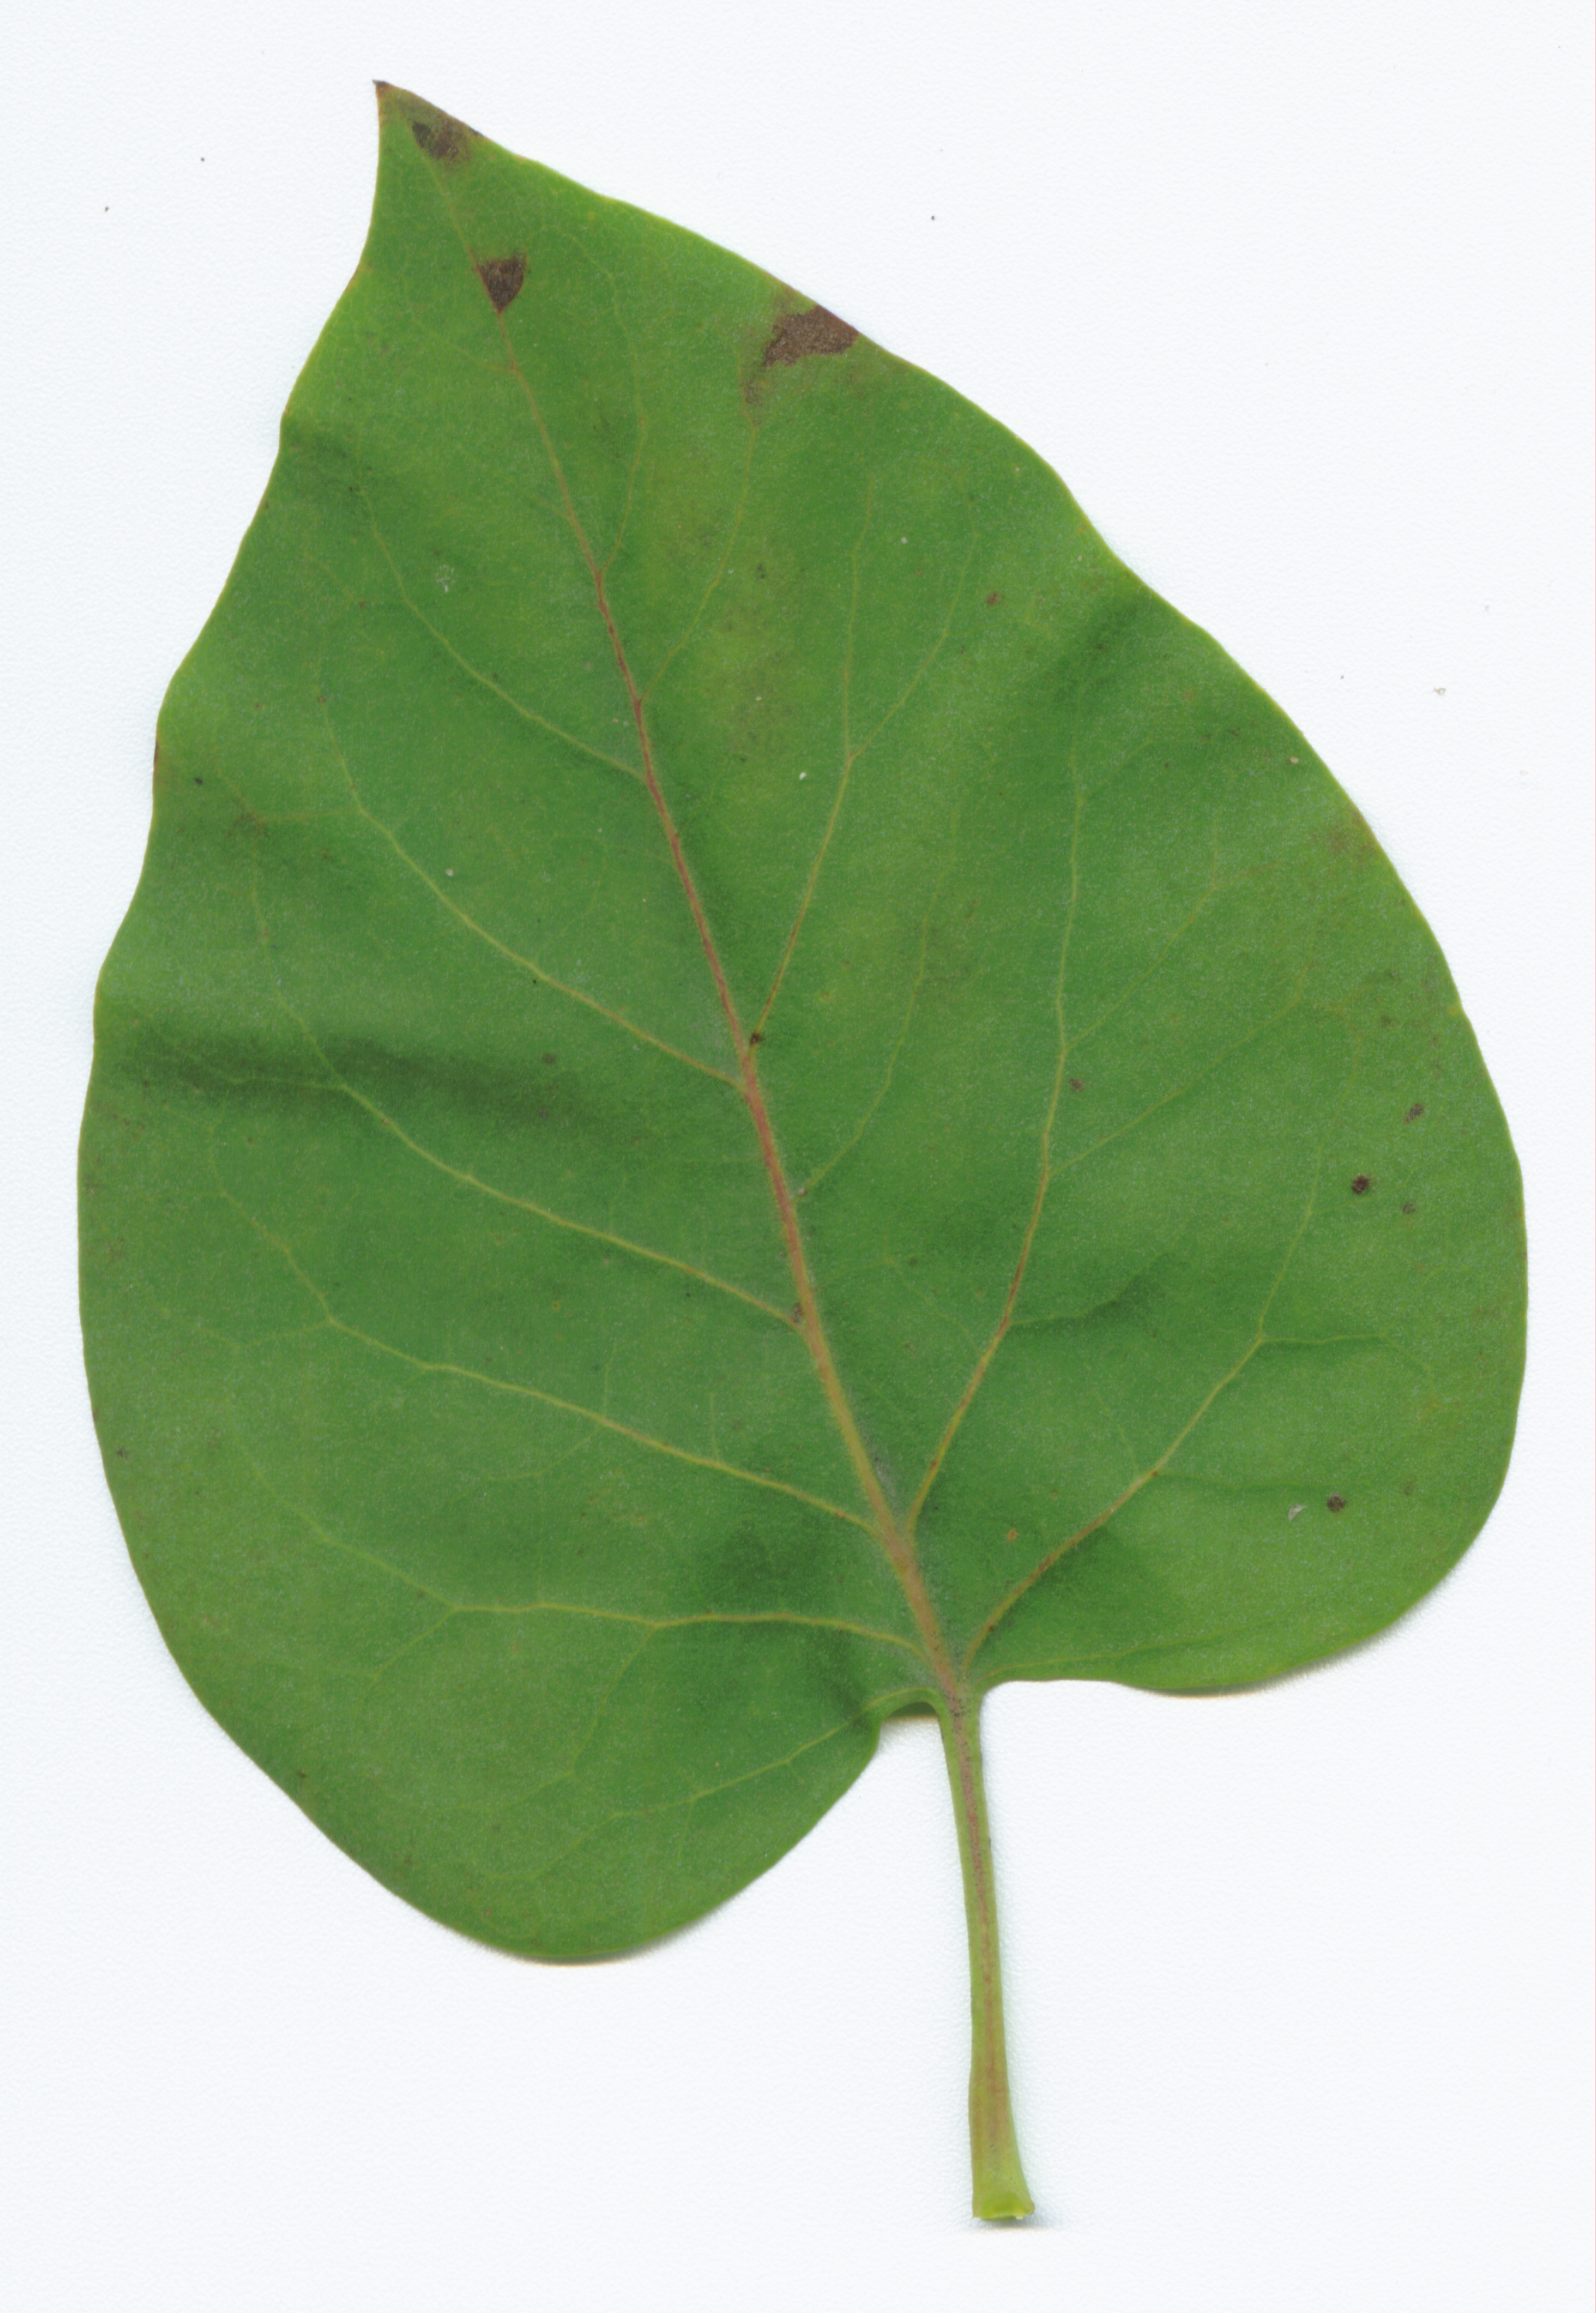 green leaf by tash11-stock on DeviantArt